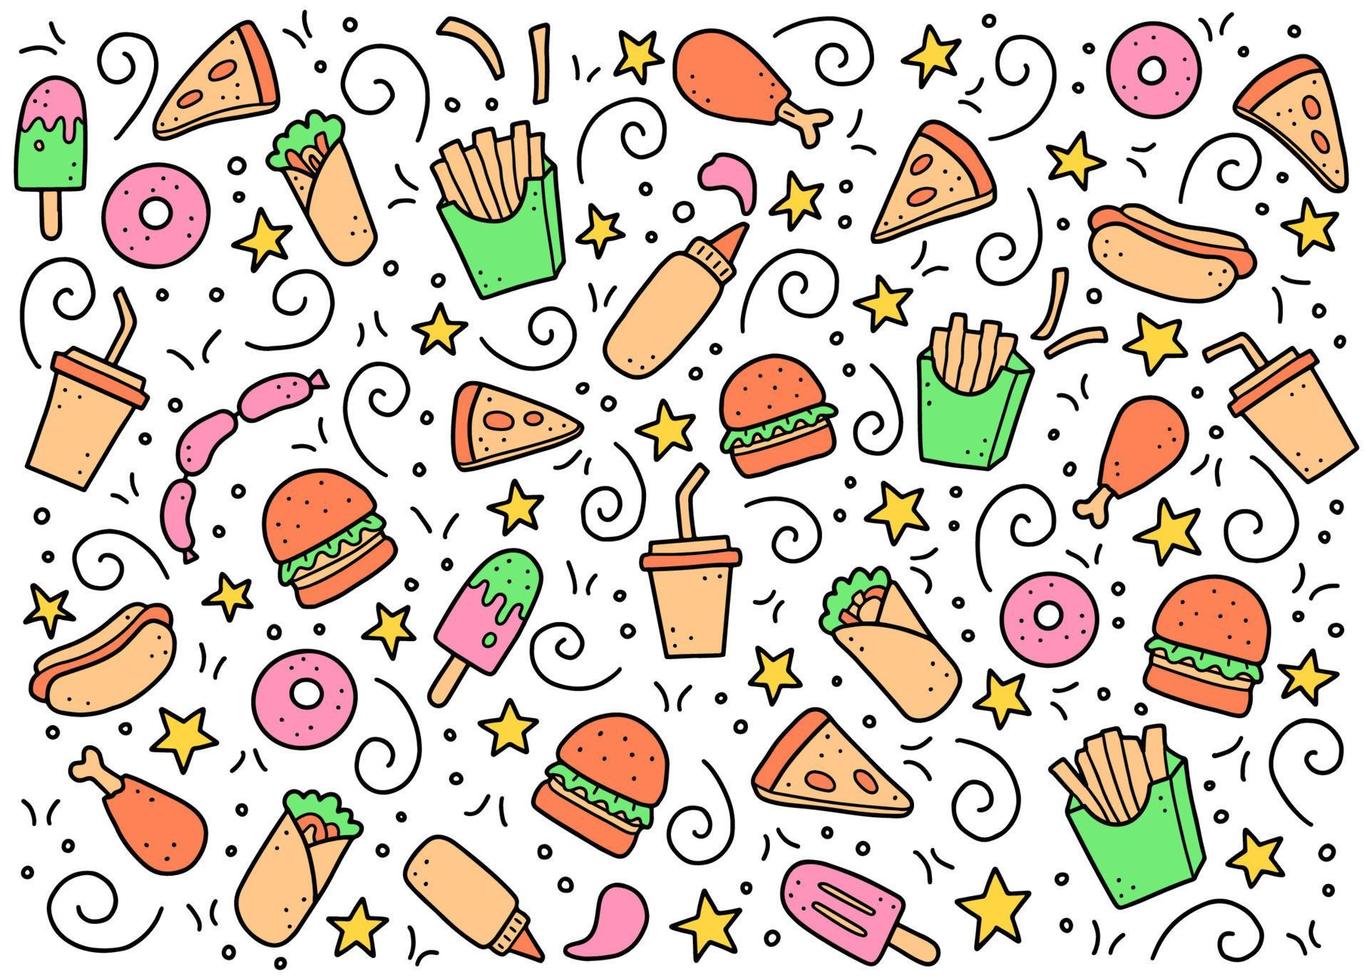 Set of hand drawn fast food doodle. Vector illustration.